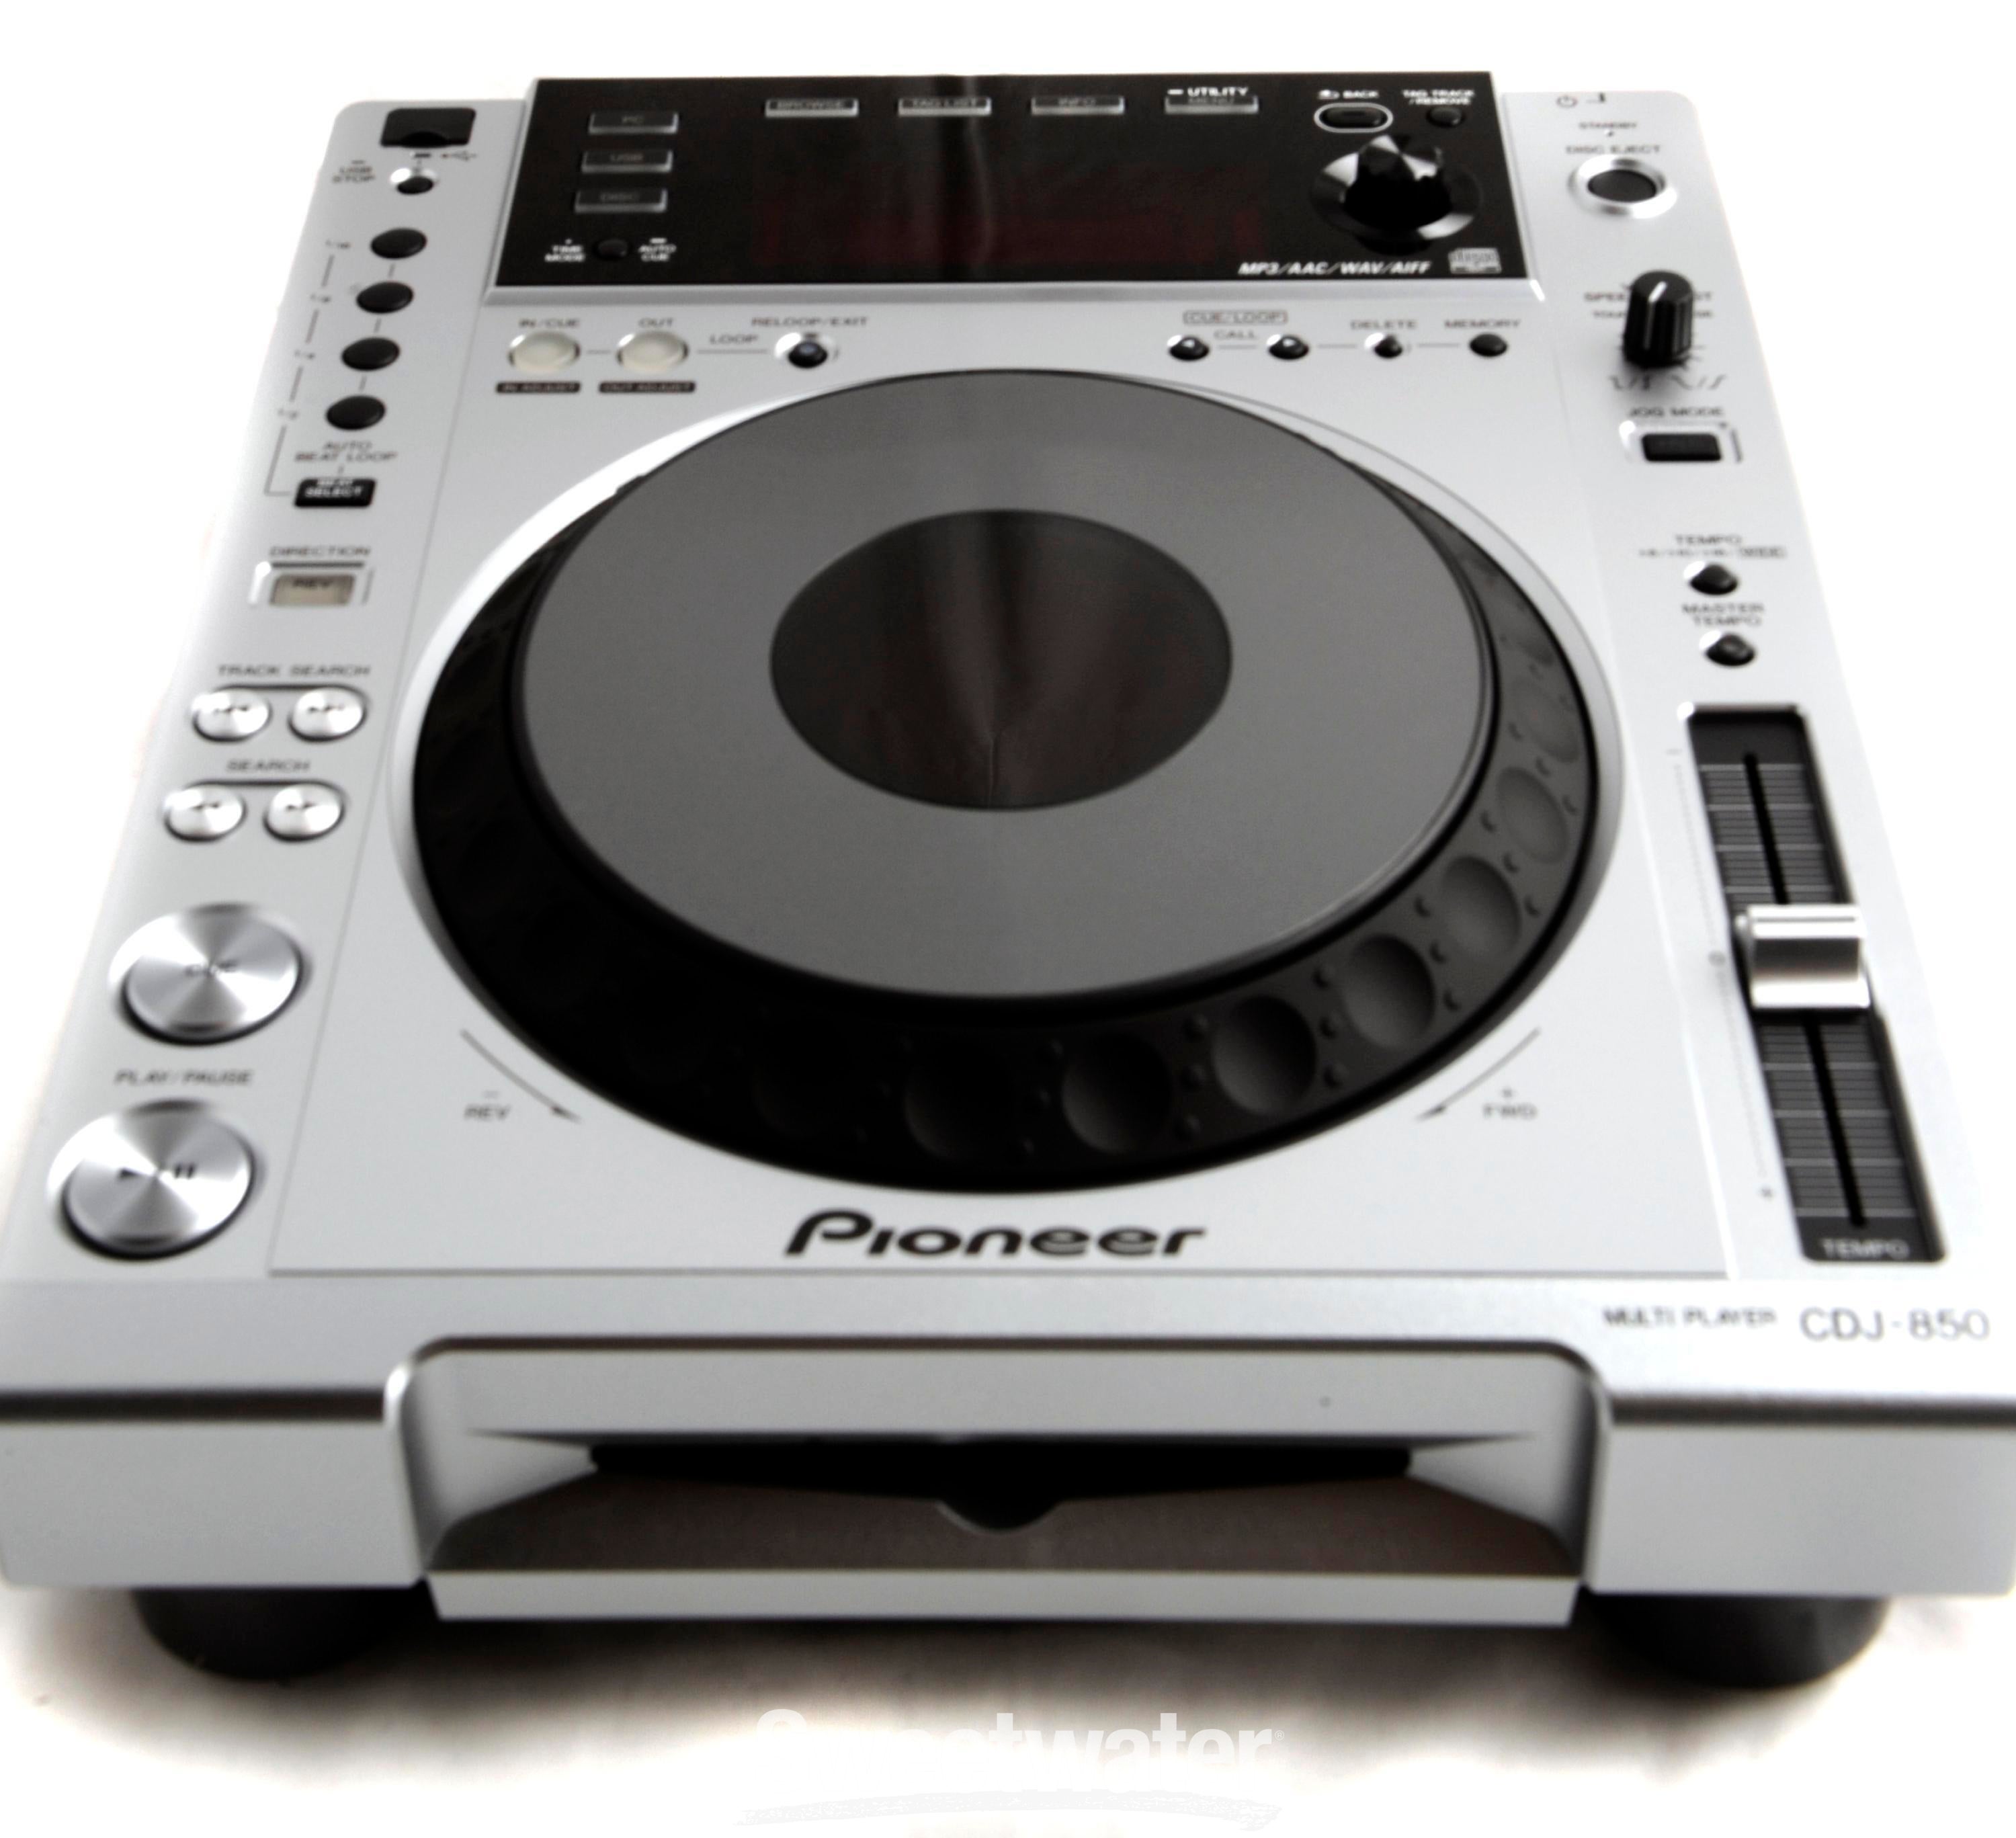 Pioneer DJ CDJ-850 Multi-format Media Player - Silver | Sweetwater